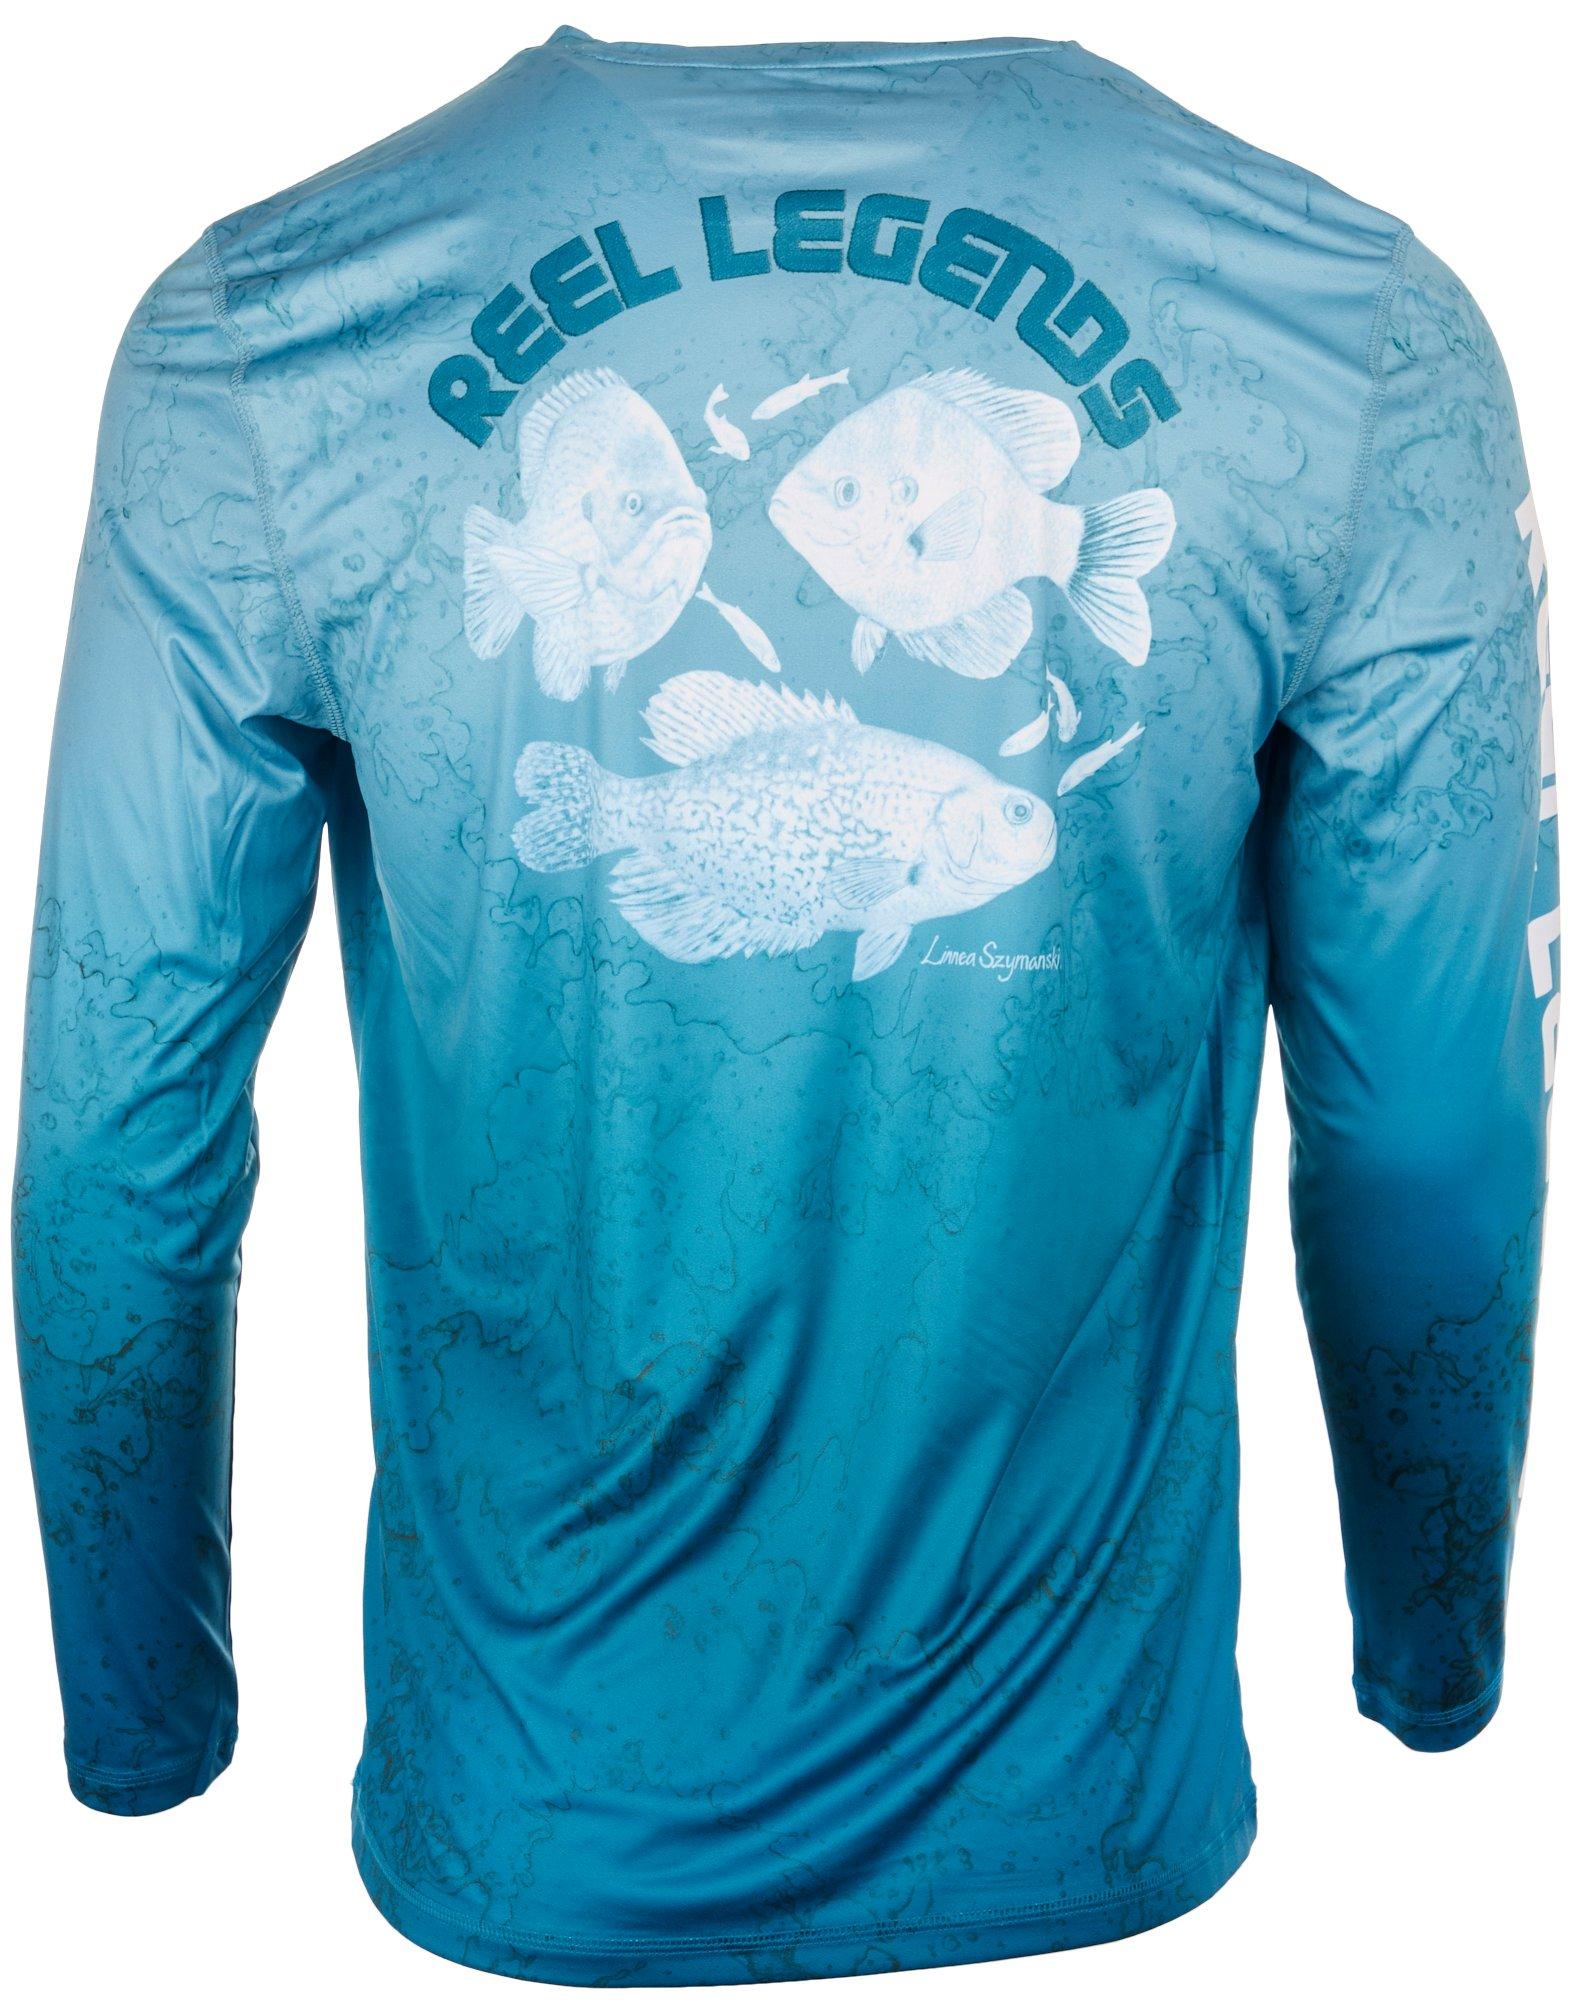 Reel Legends Mens Print Reel-Tec Long Sleeve T-Shirt